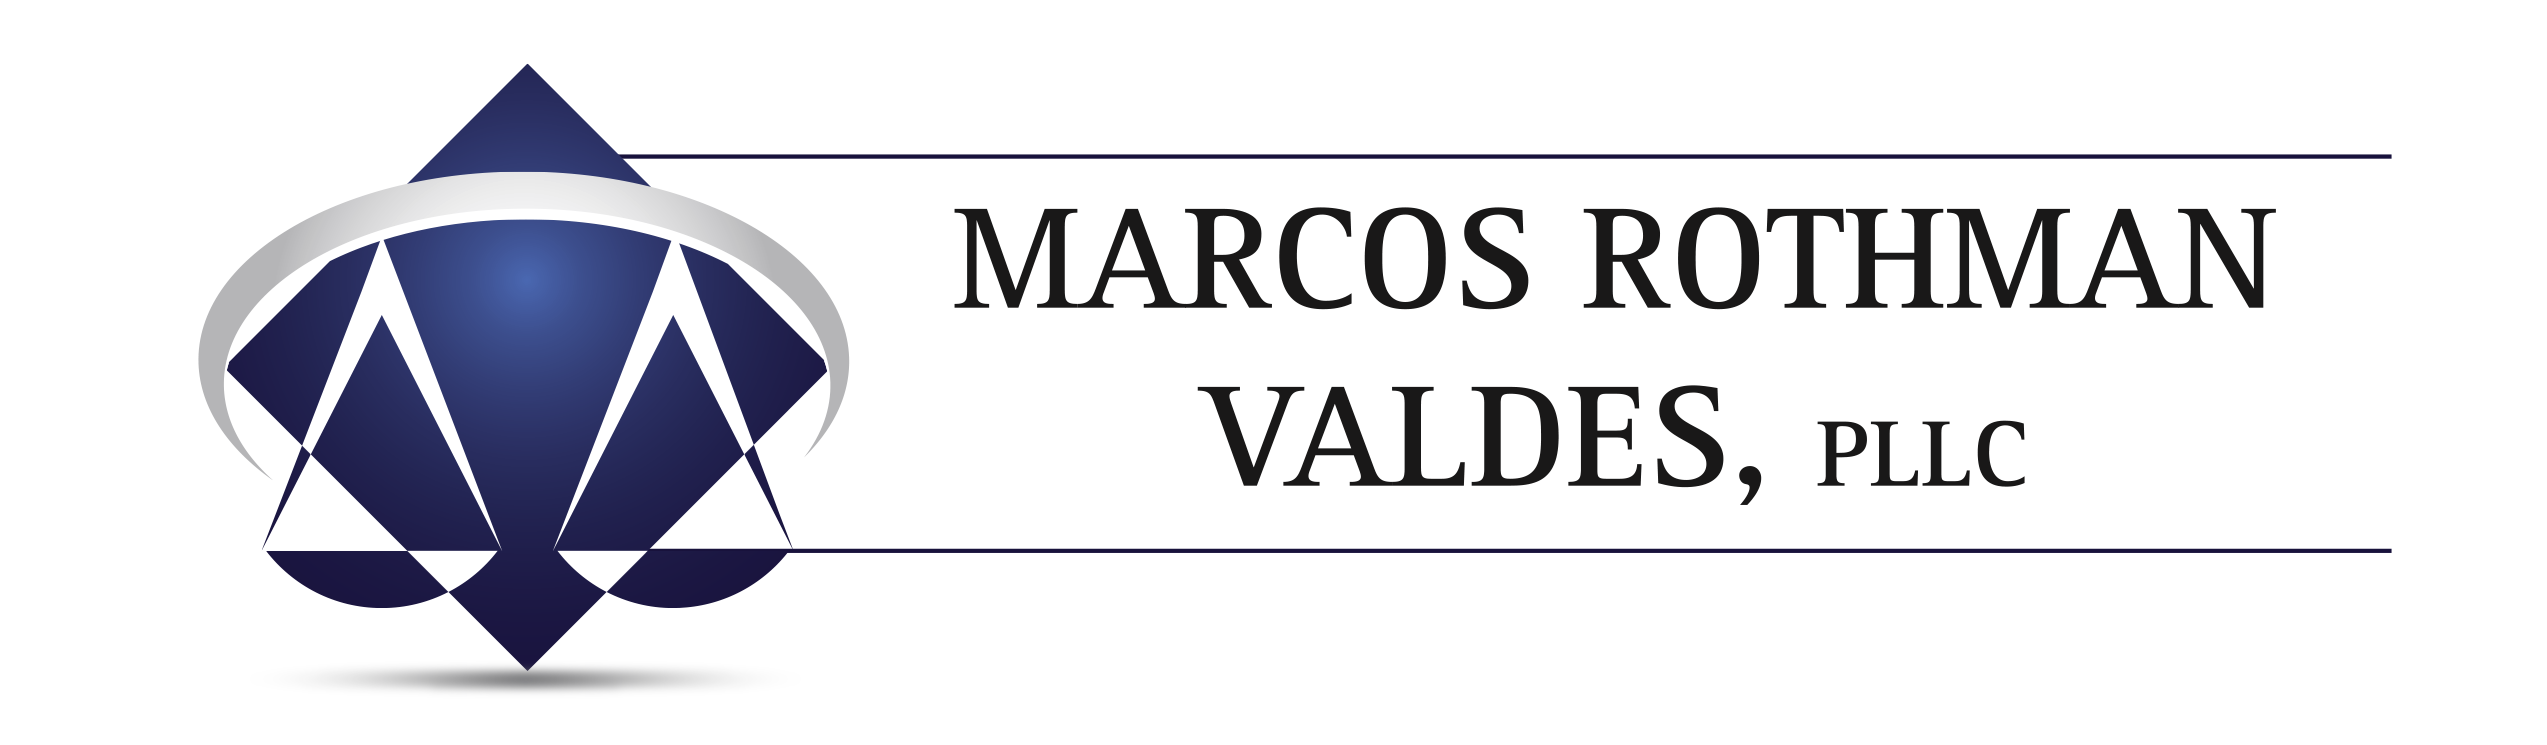 Marcos Rothman Valdes PLLC